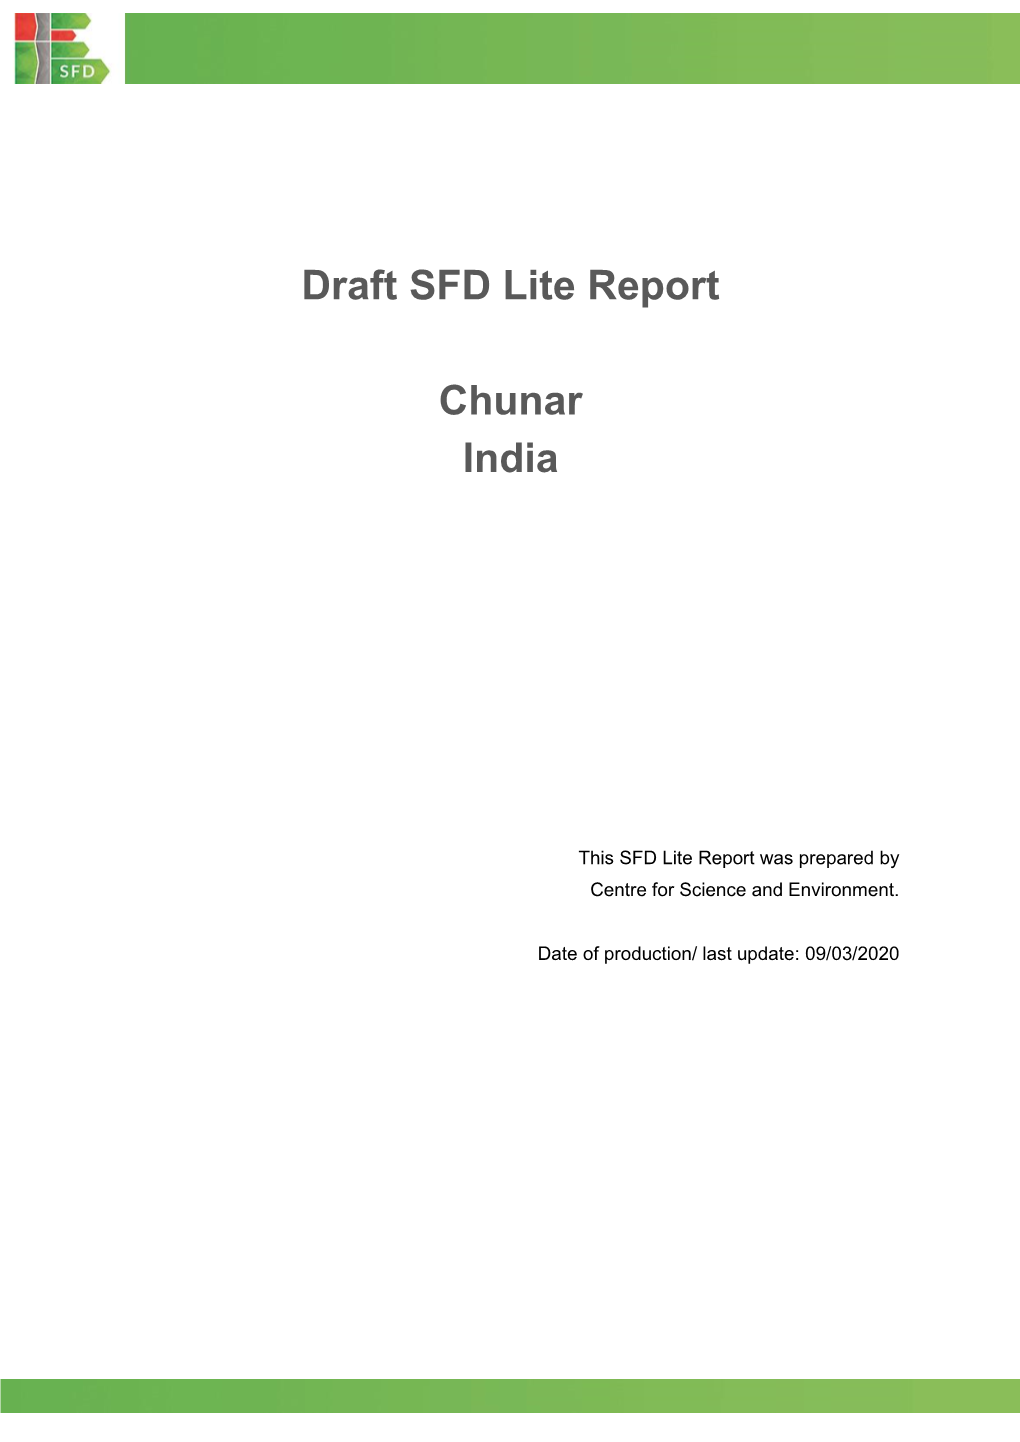 Draft Chunar SFD Lite Report